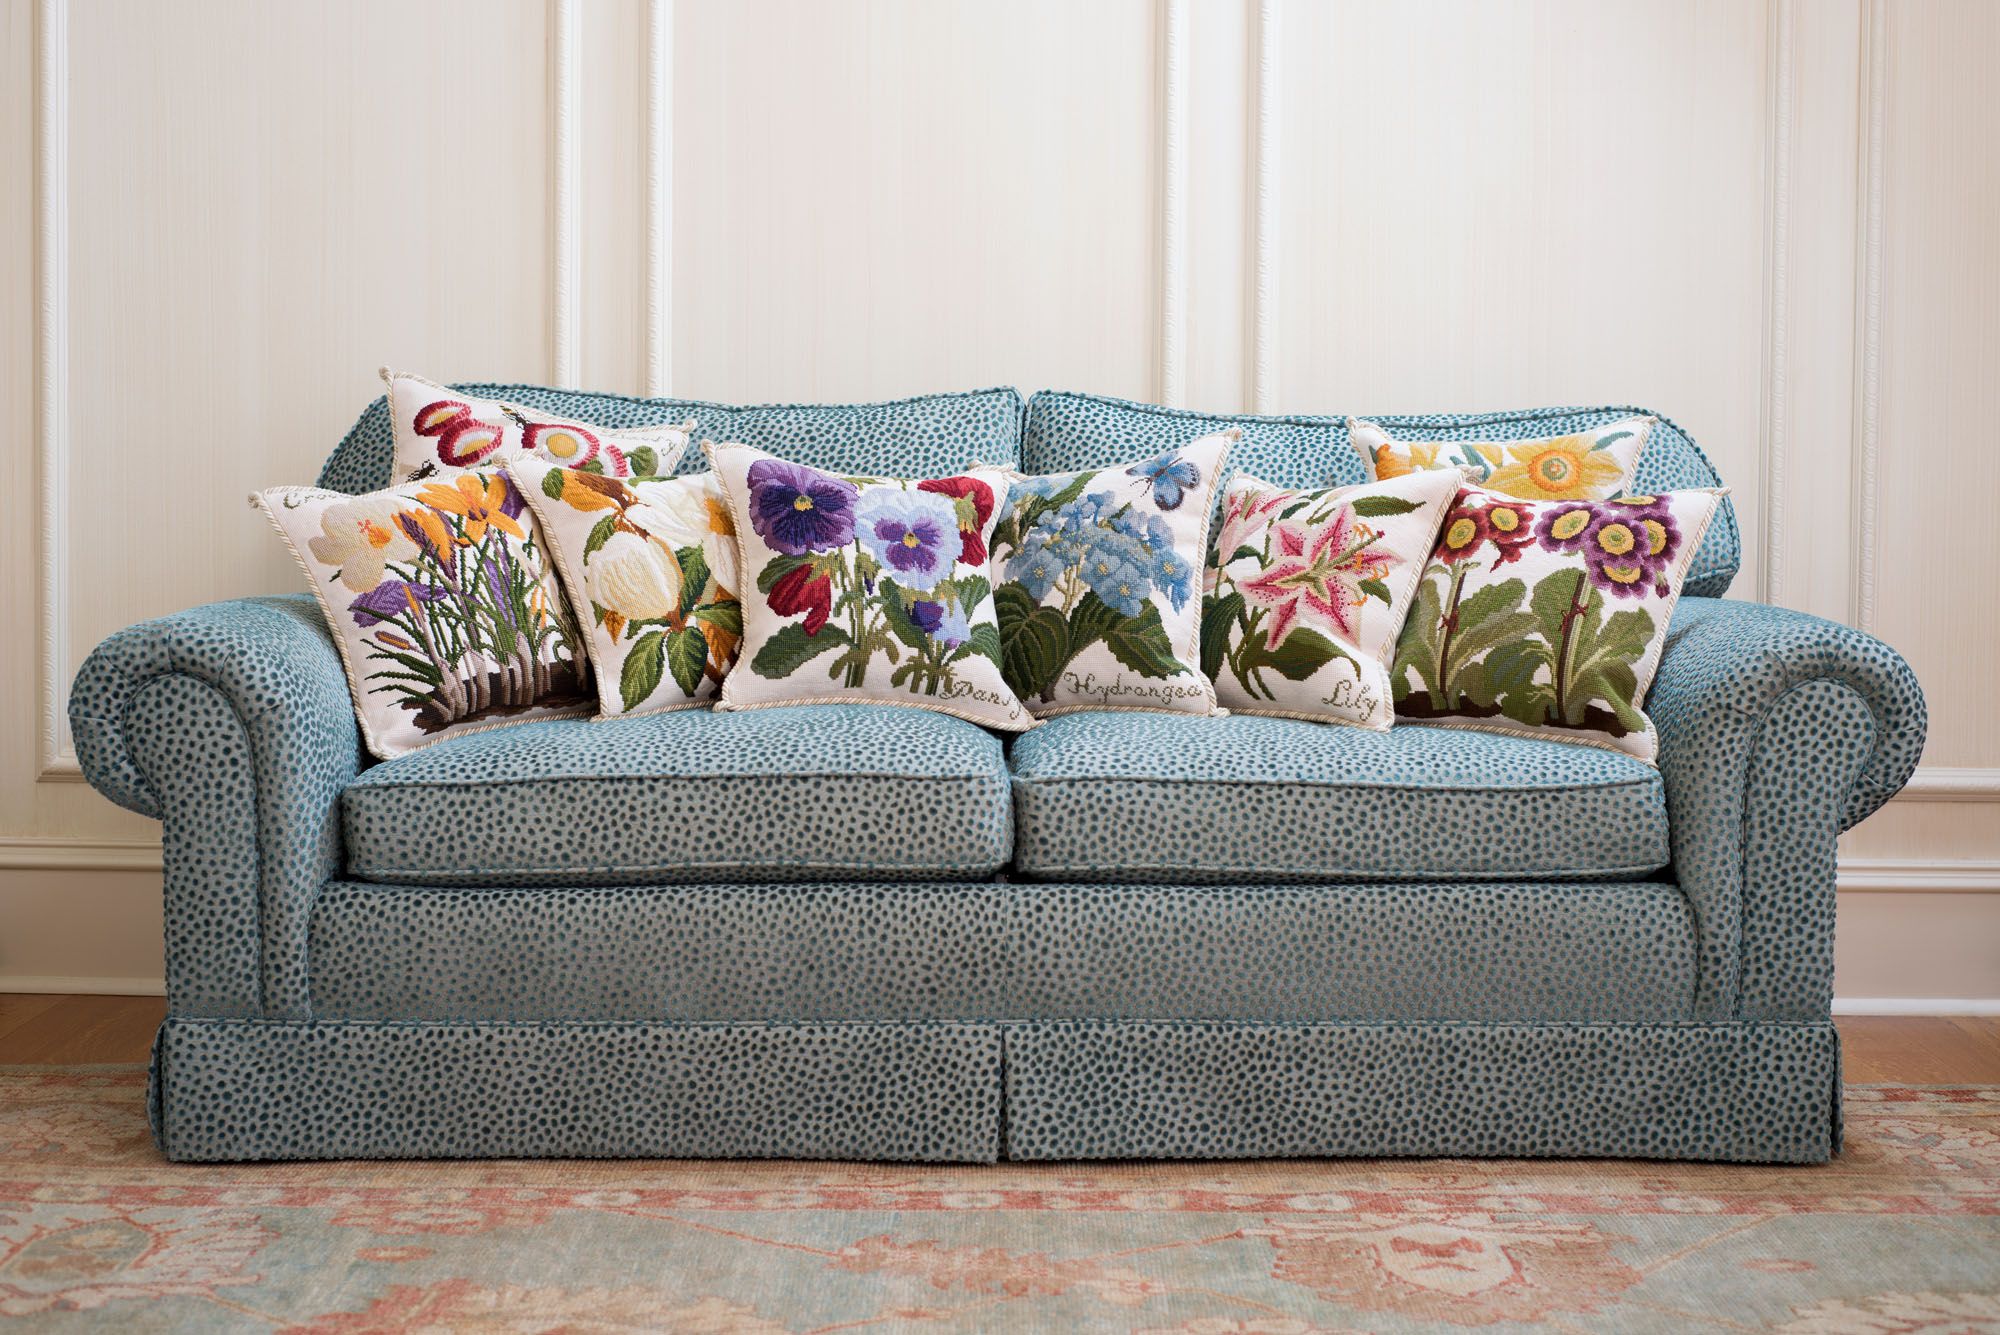 Elizabeth Bradley Home, luxury pillows